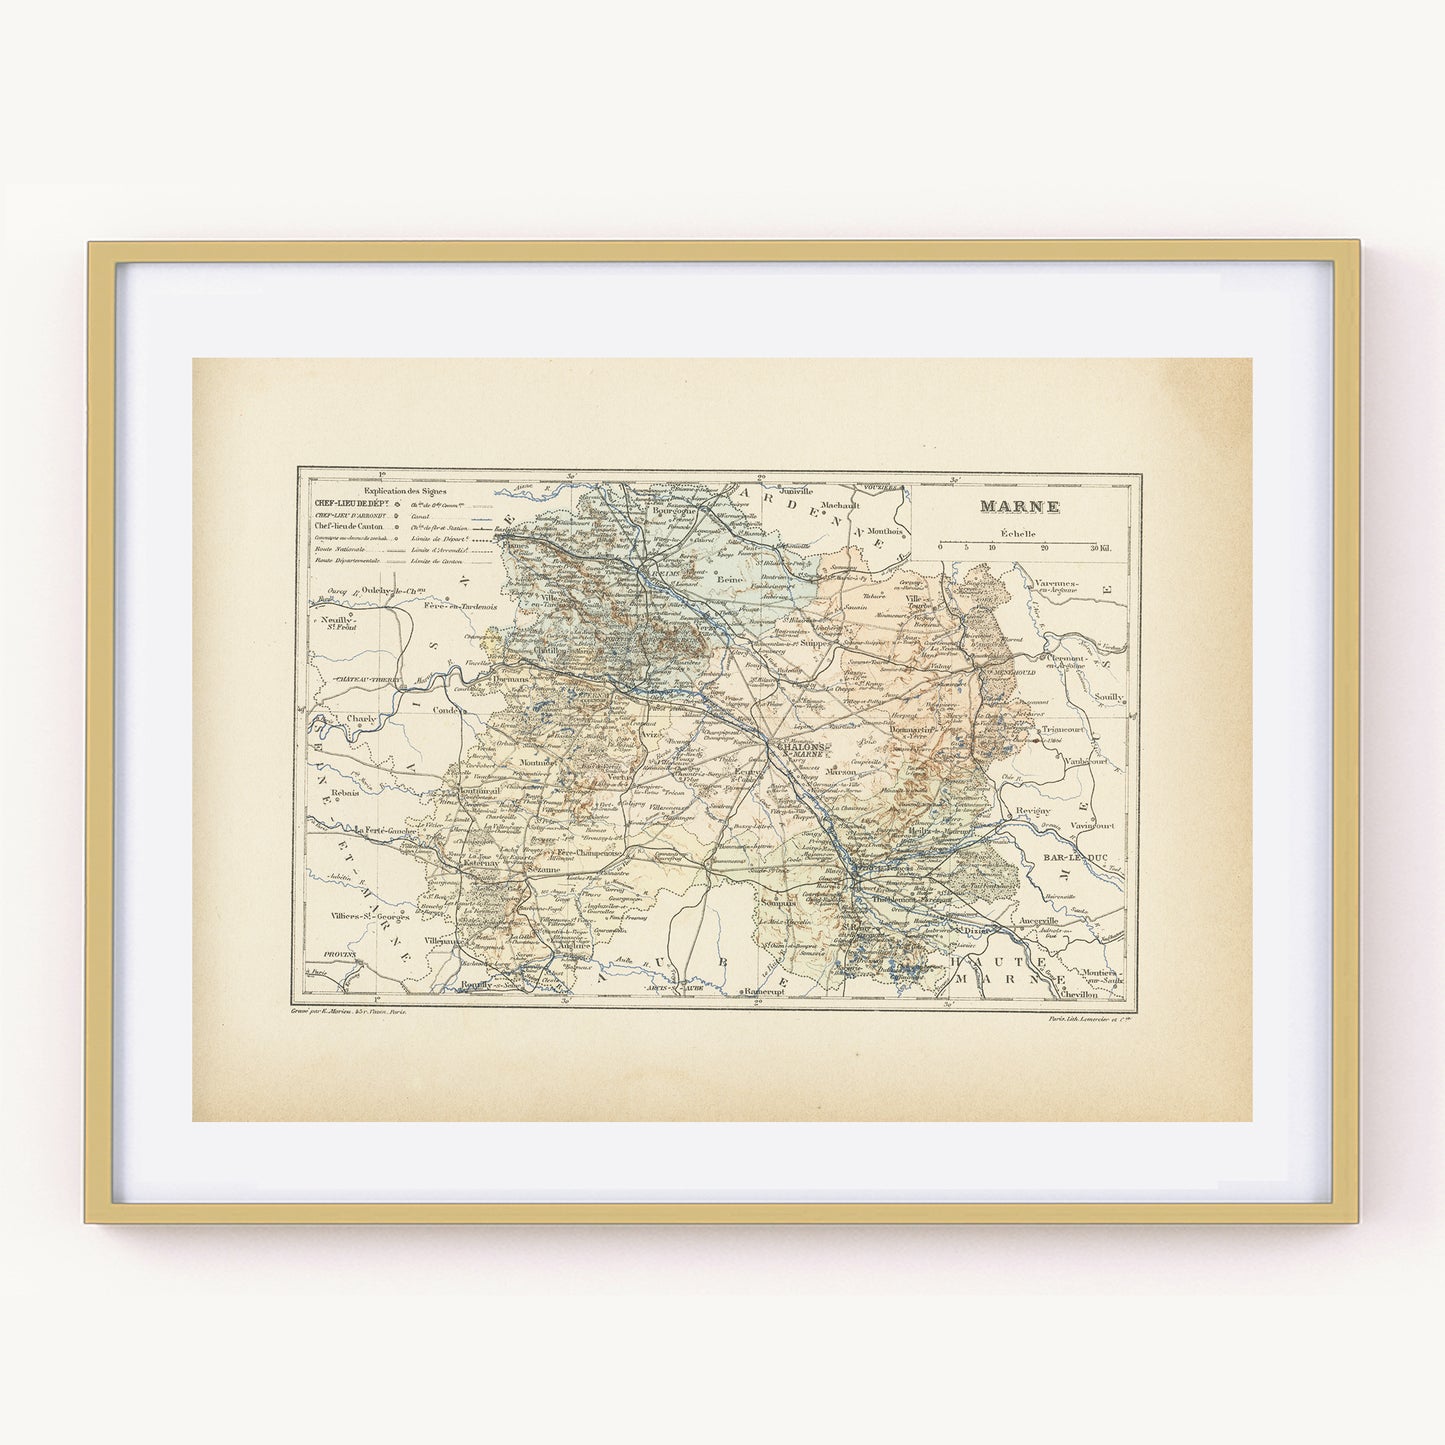 1892 Carte ancienne de la Marne